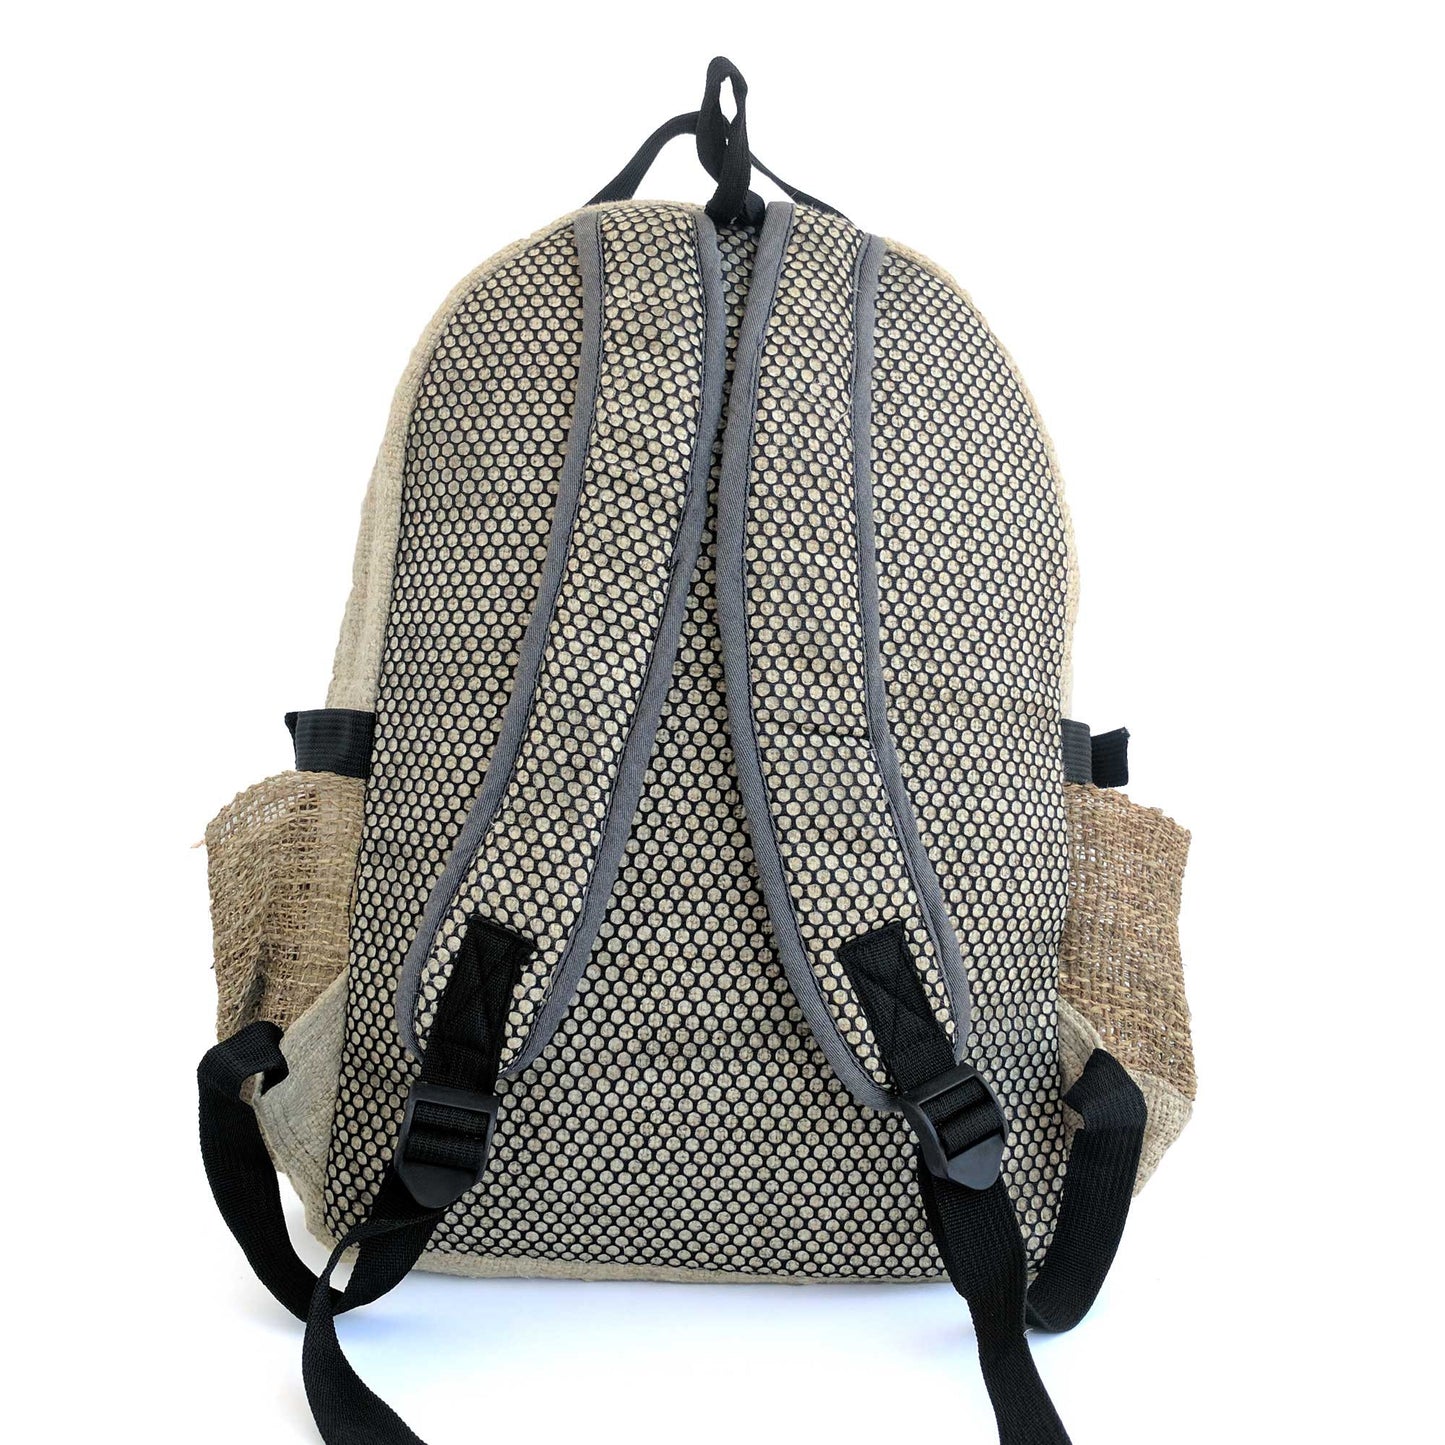 Hemp backpack made from 100% pure hand-woven Hemp rear view